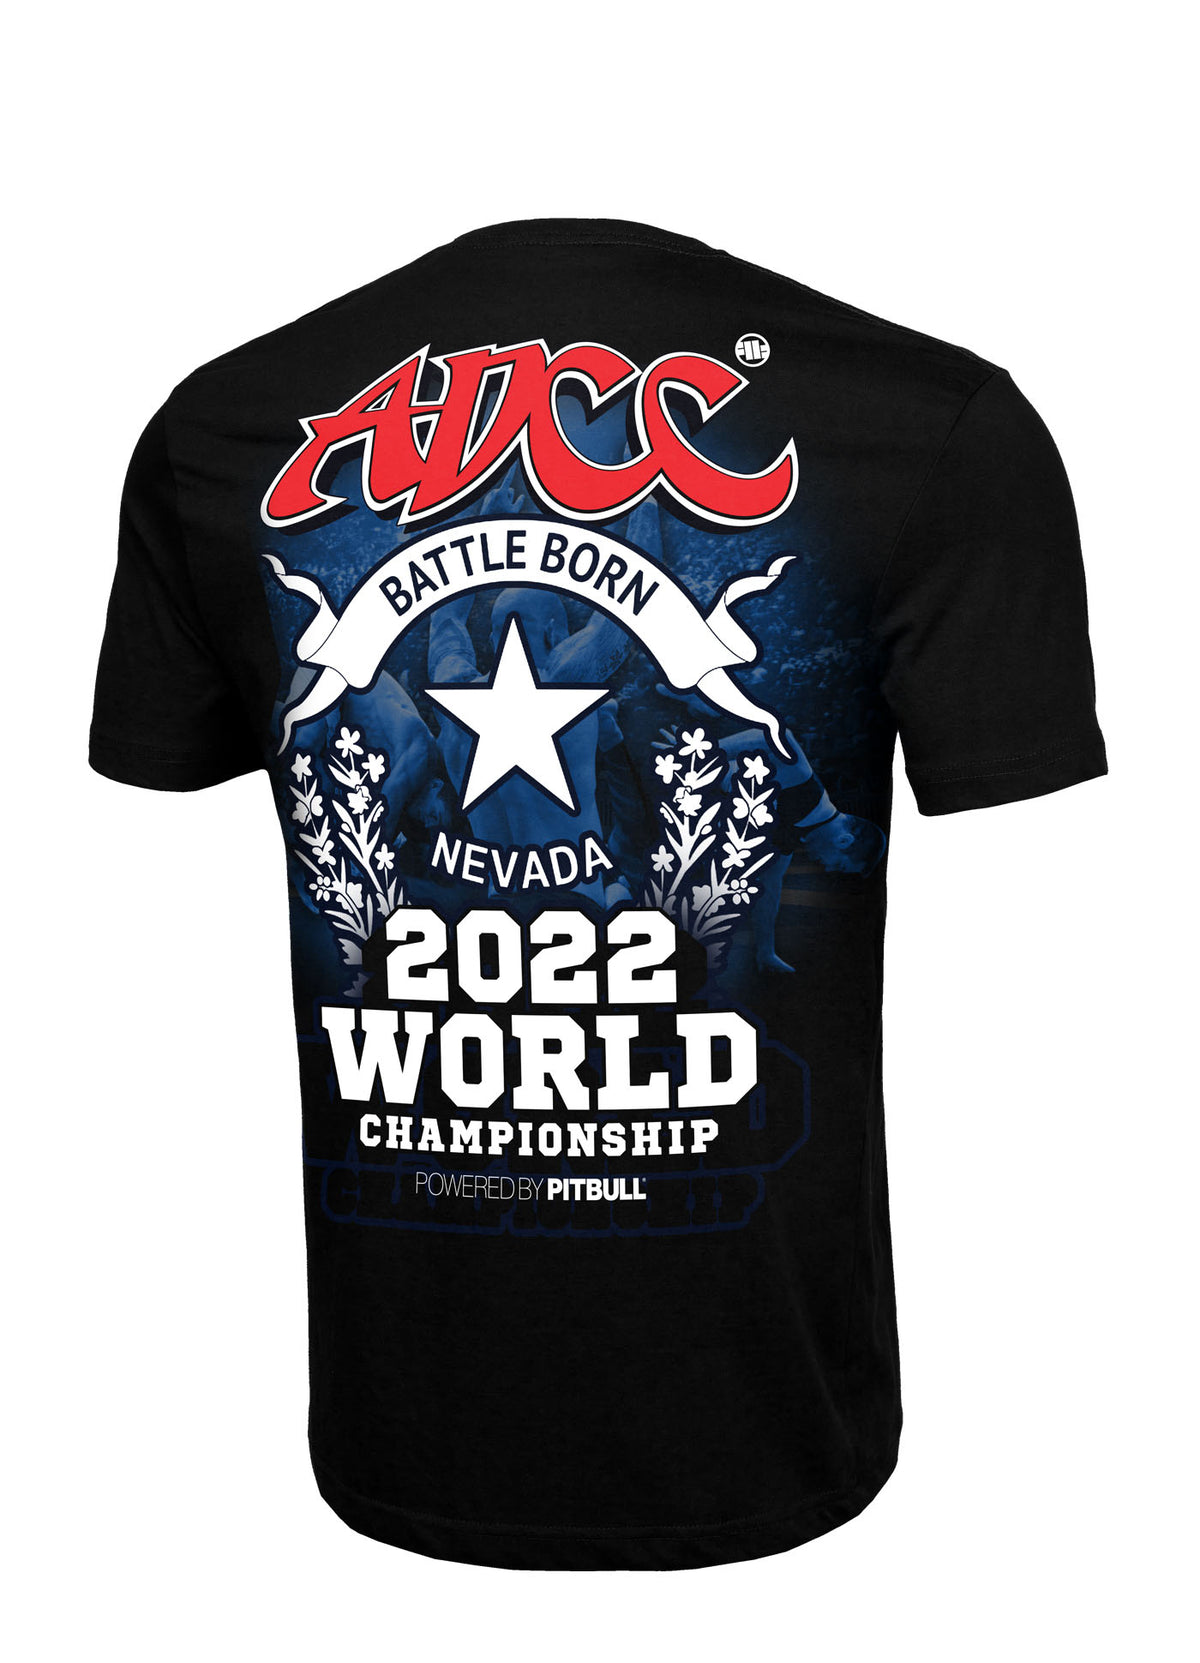 ADCC CHAMPIONSHIP 2022 NEVADA Black T-shirt.